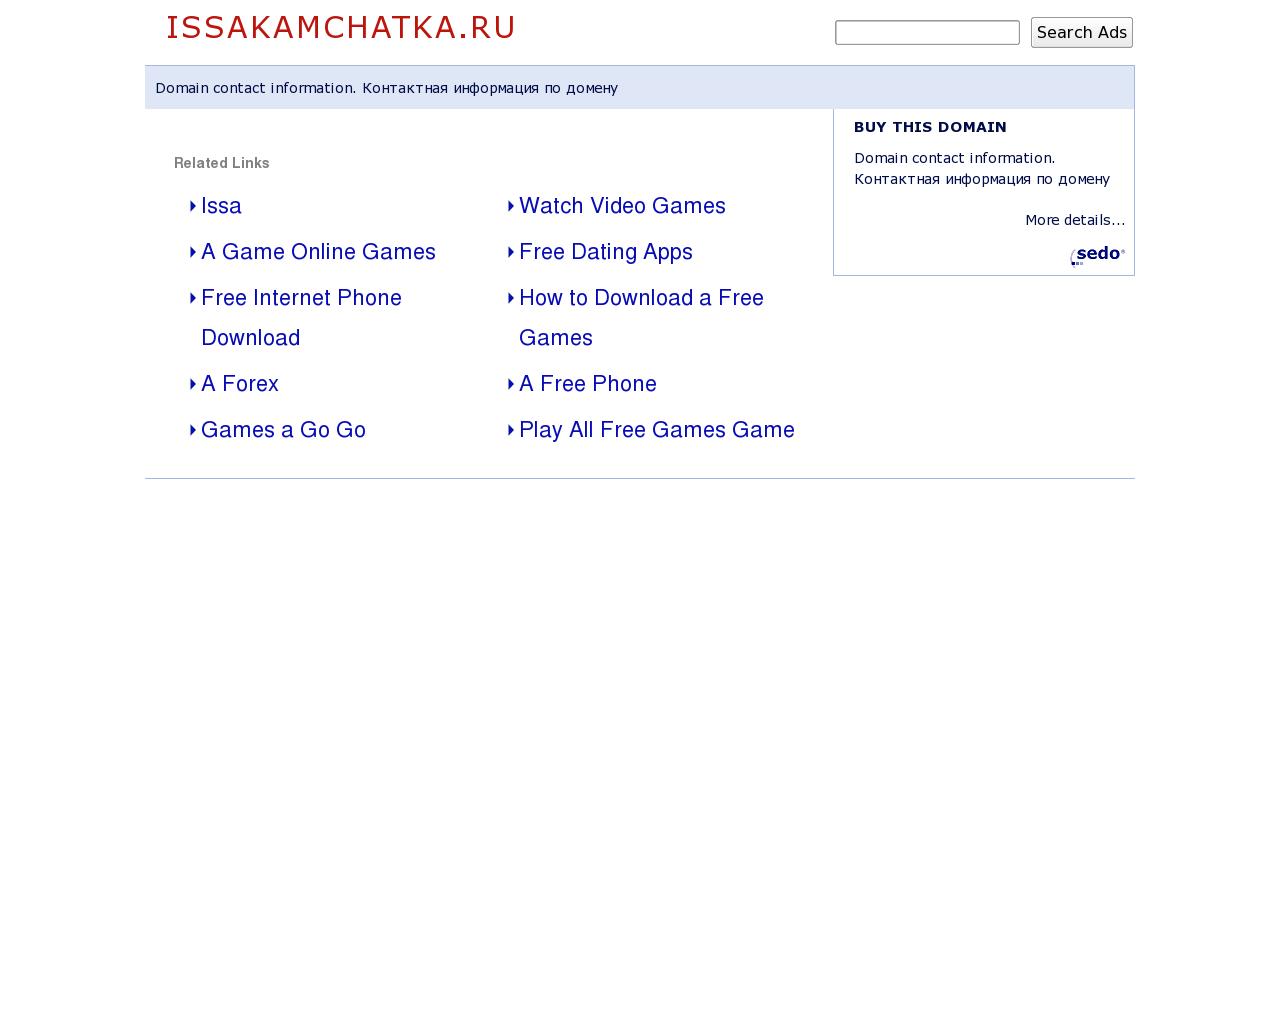 Изображение сайта issakamchatka.ru в разрешении 1280x1024